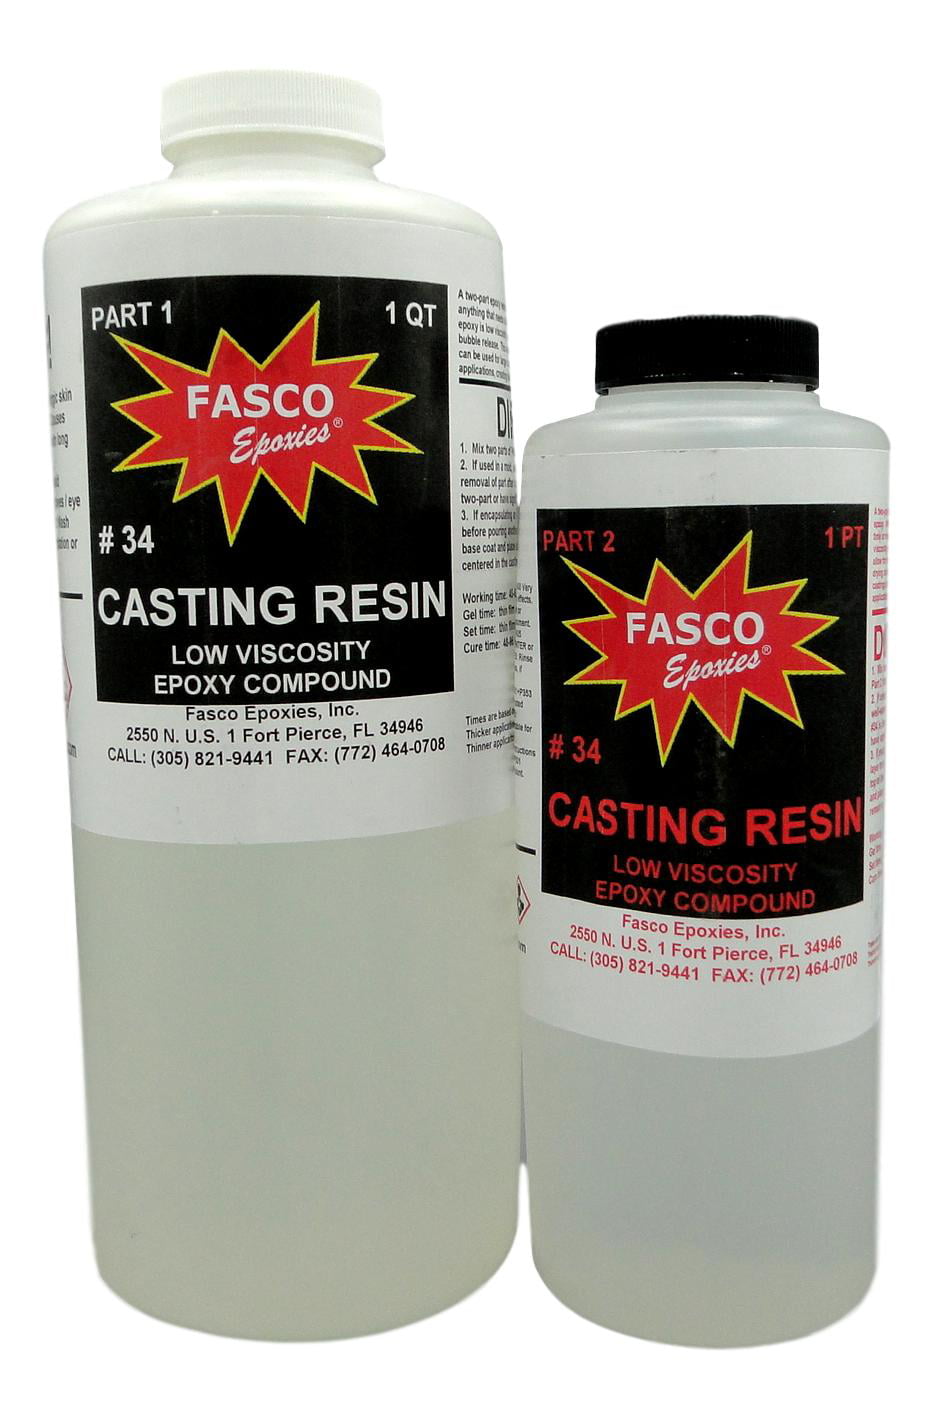 ArtResin - Epoxy Resin - Clear - Non-Toxic - 2 Gal (7.57 L)